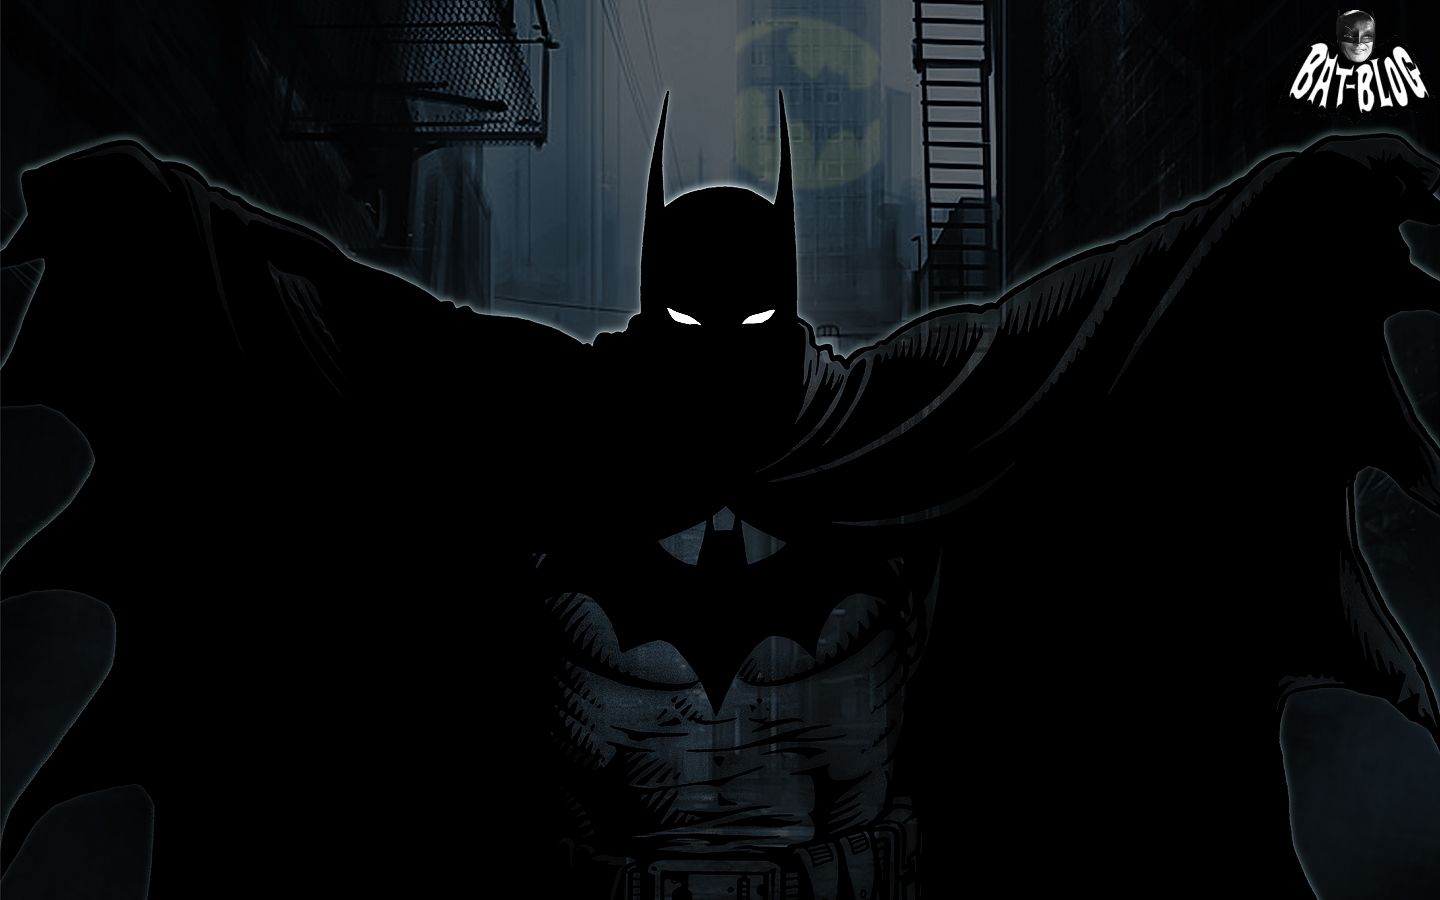 BAT, BATMAN TOYS and COLLECTIBLES: Cool BATMAN WALLPAPER By Graphic Artist Chris Franchi